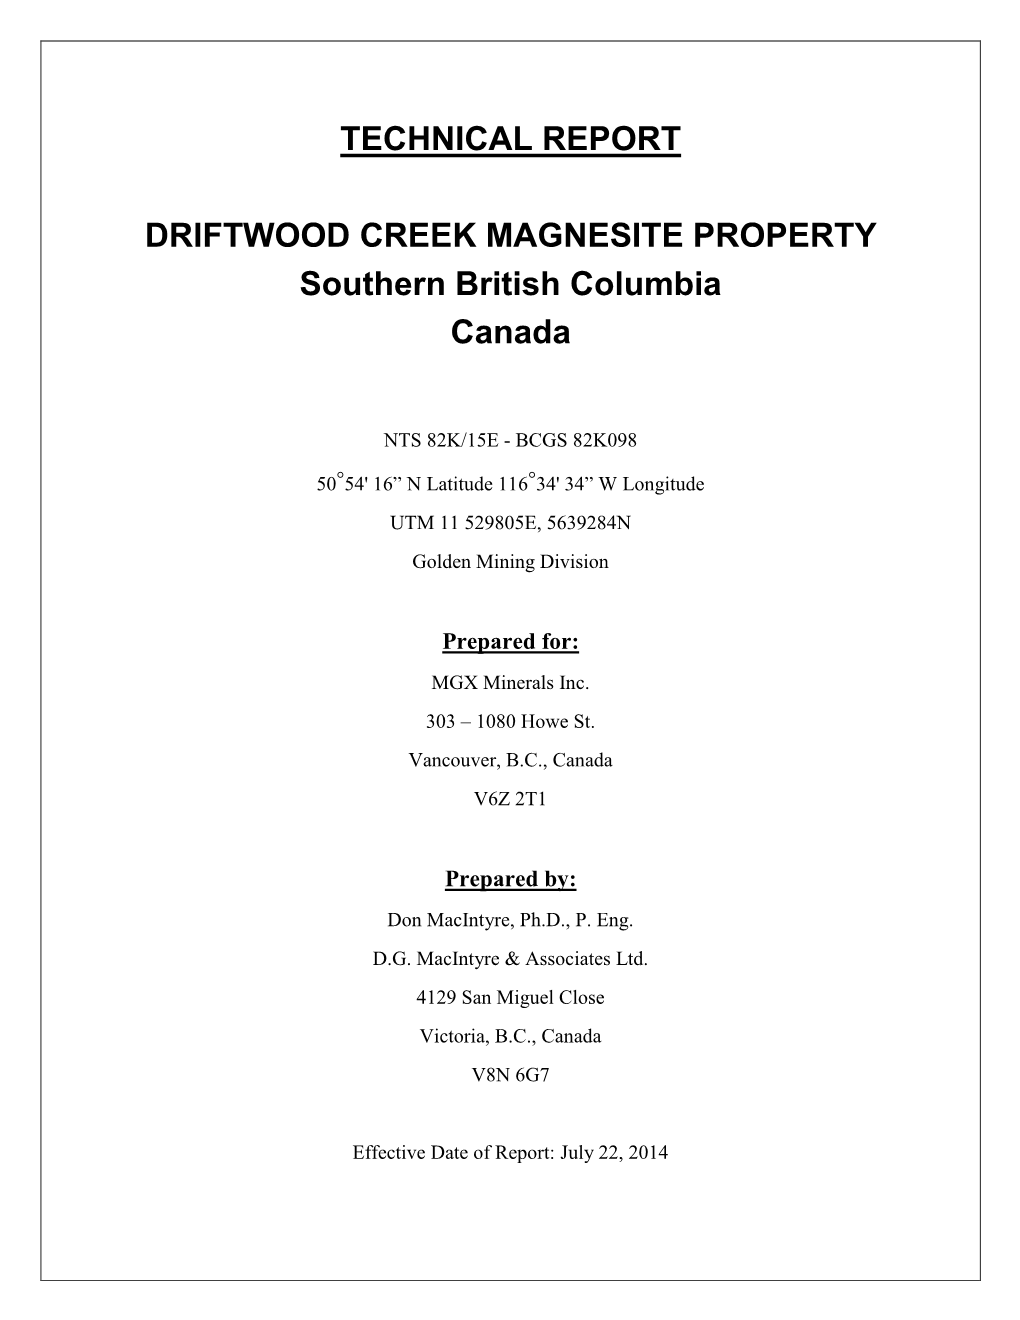 Technical Report Driftwood Creek Magnesite Property